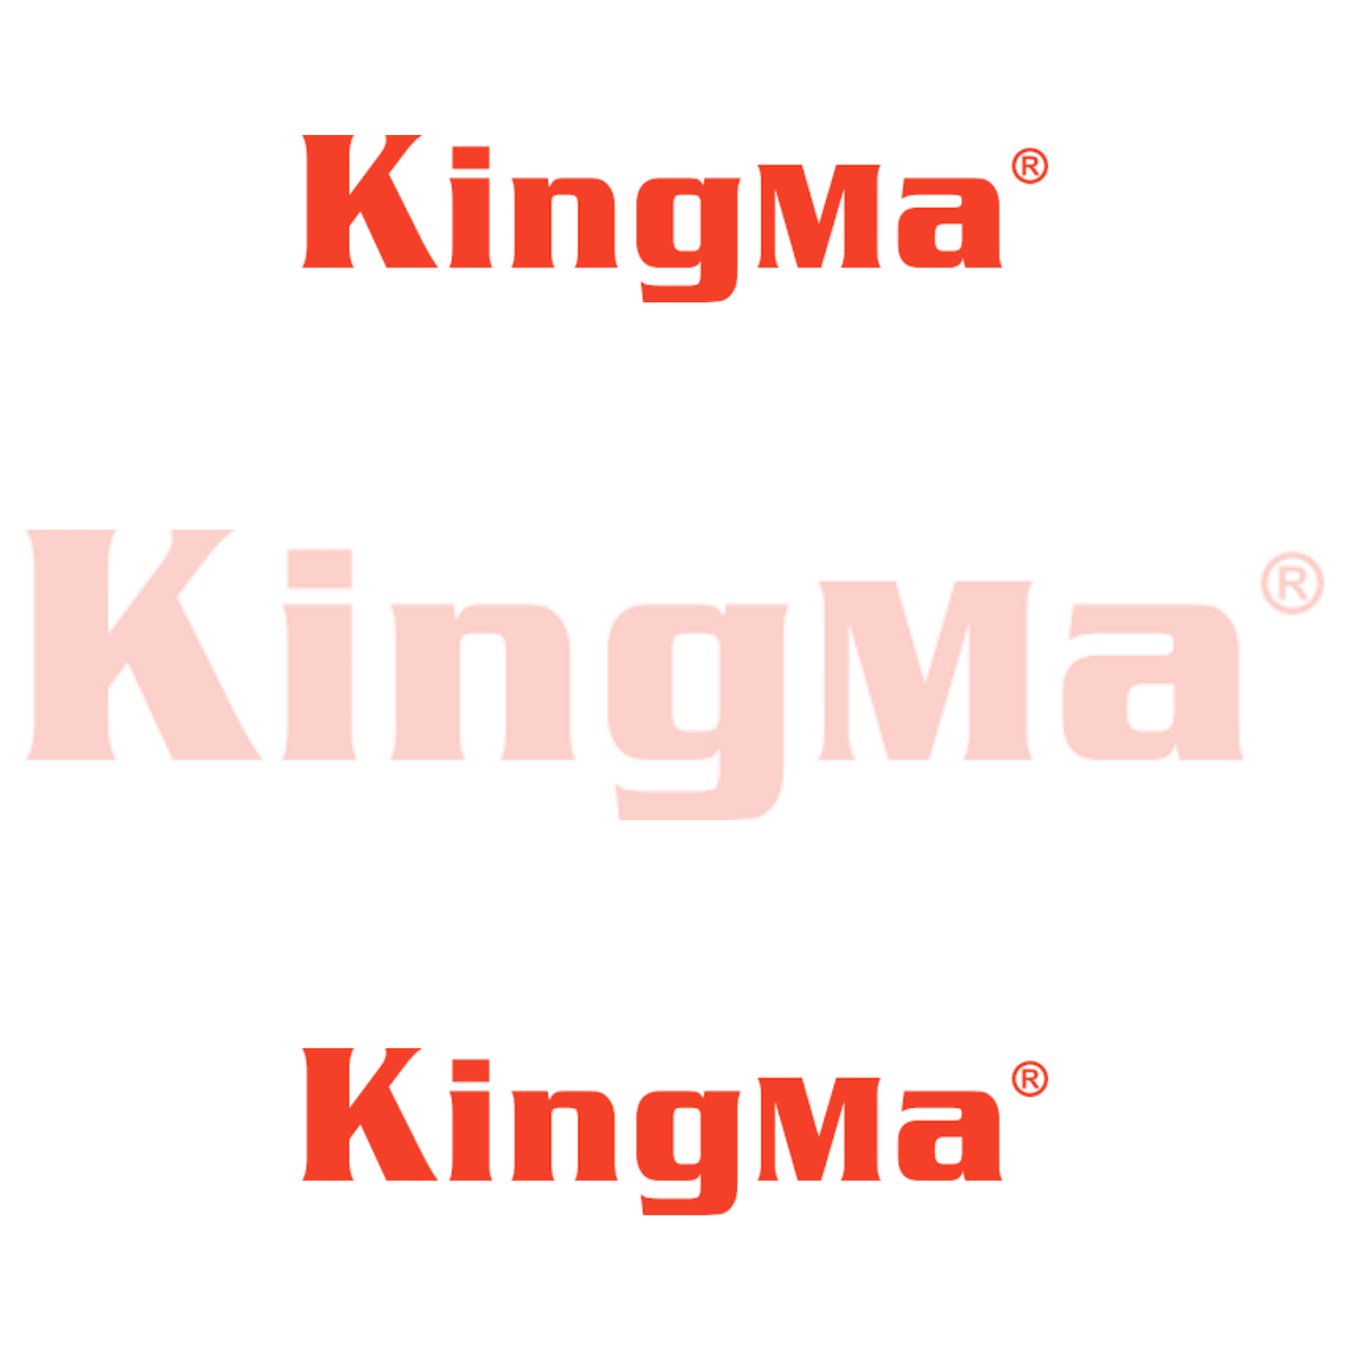 KingMa - 673SHOP.com